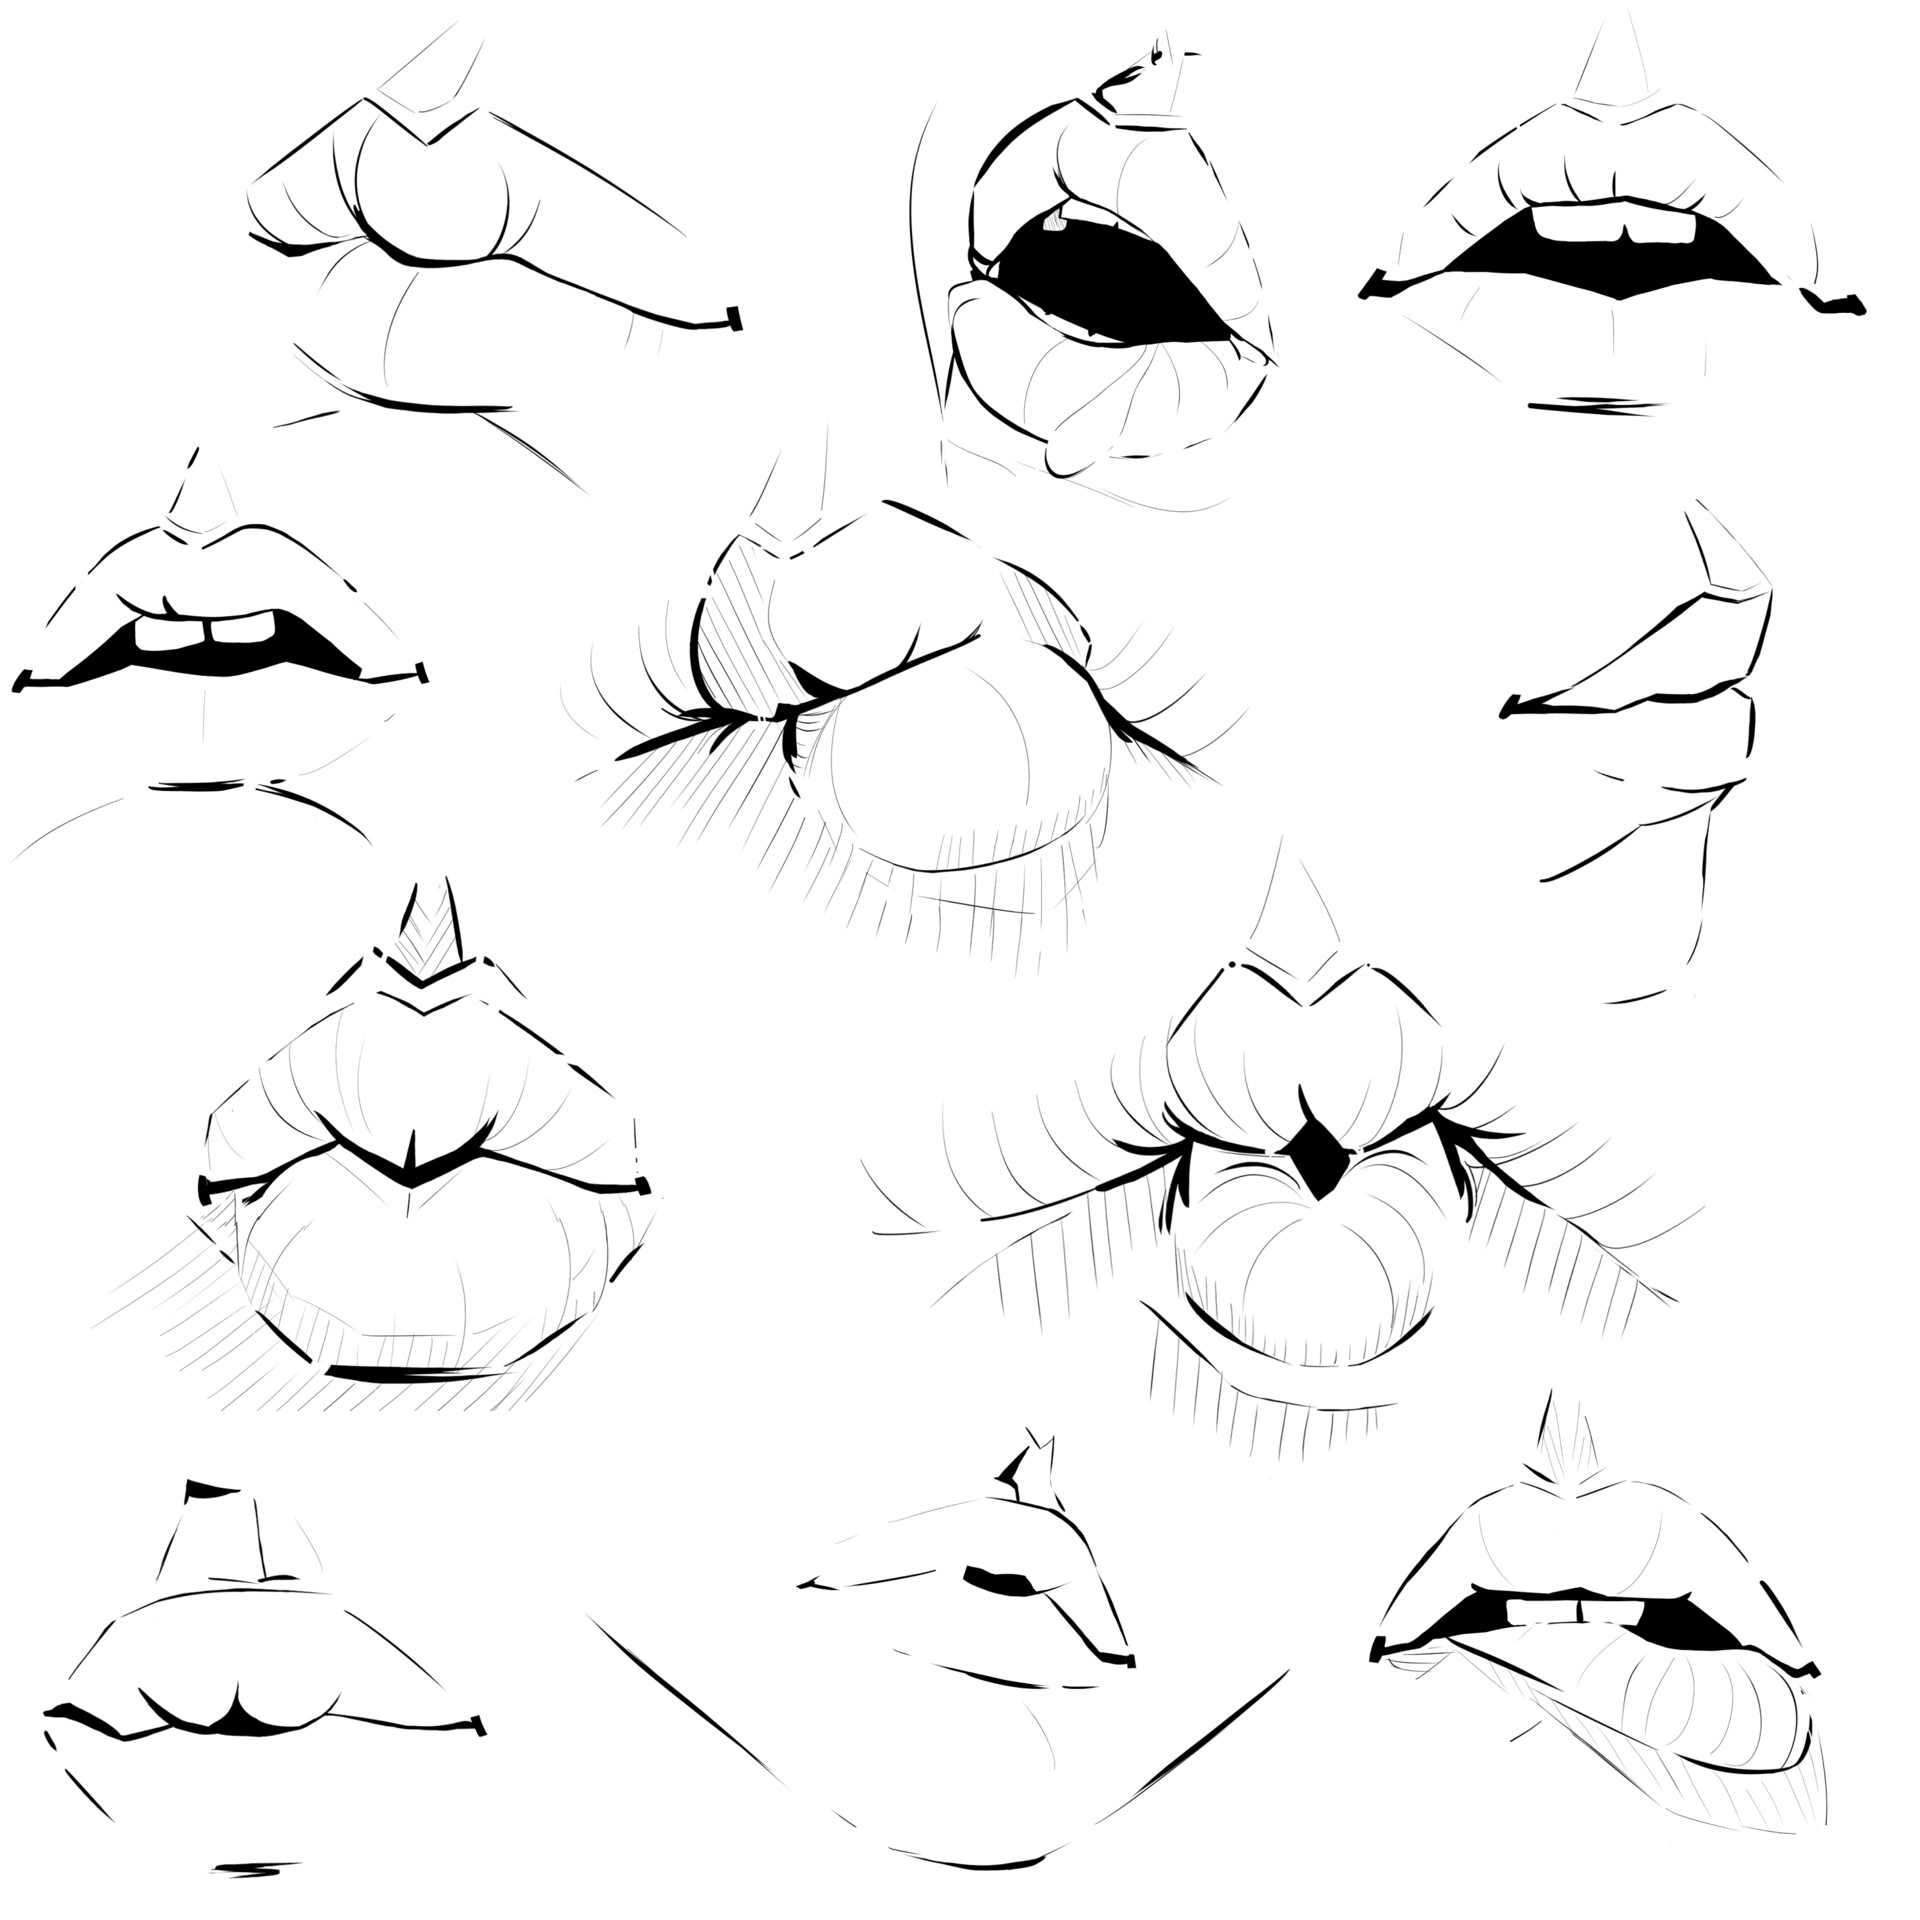 ArtStation - Mouth anatomy study